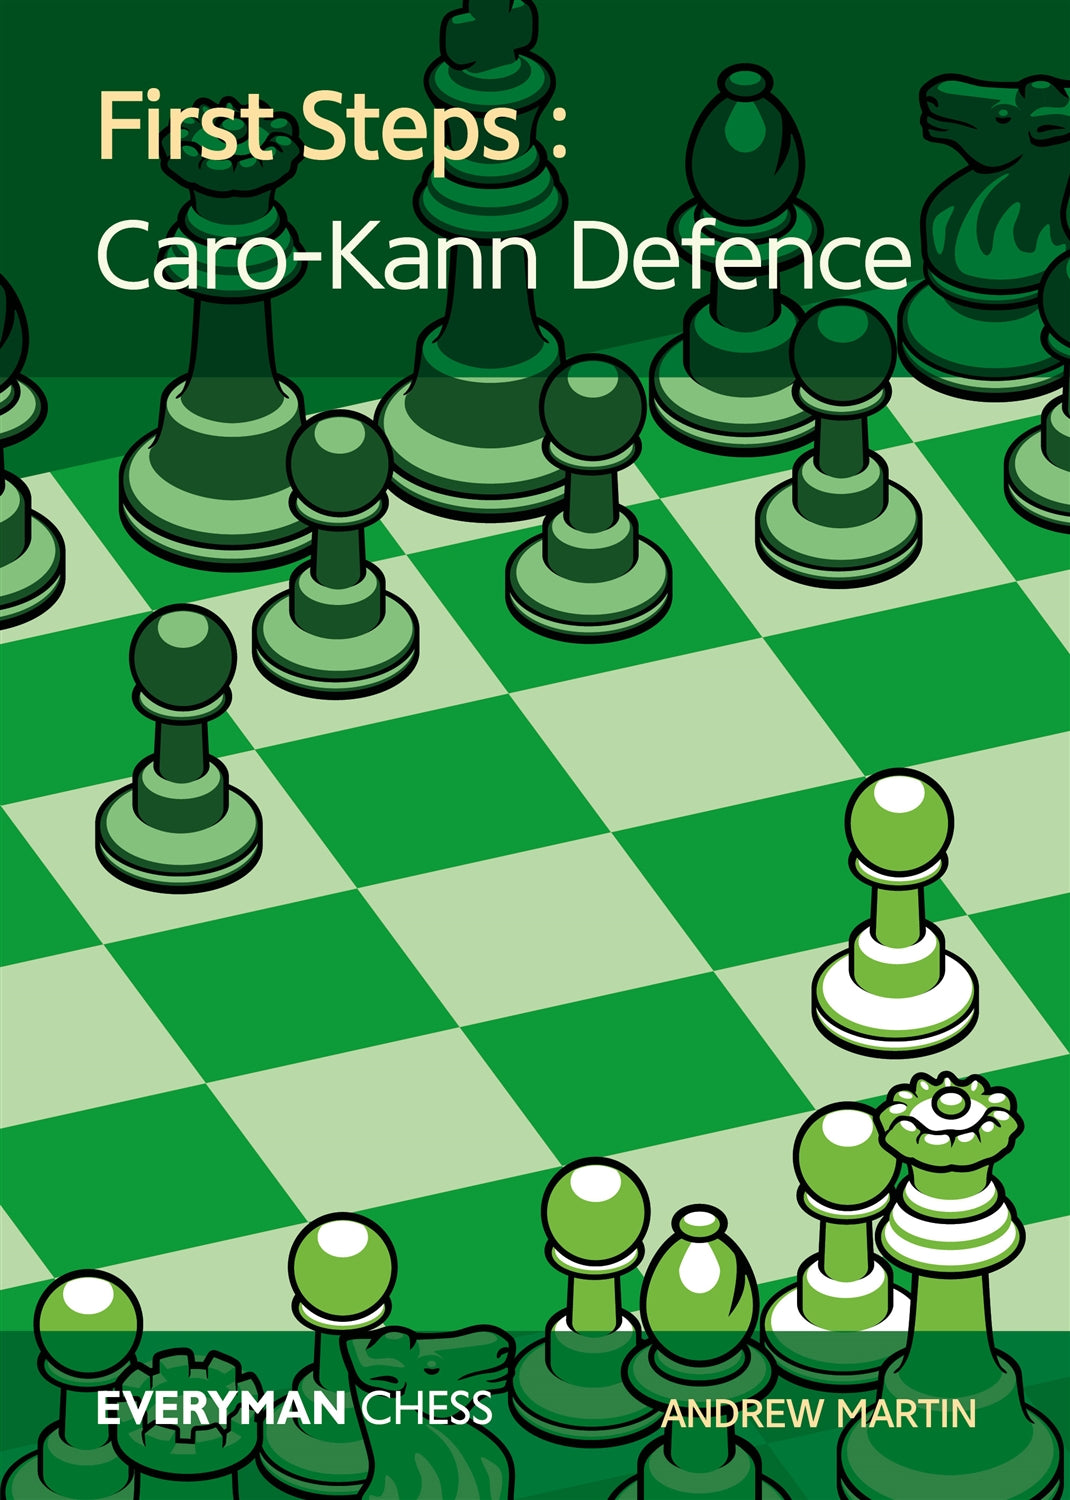 Chess Opening - Play the Caro-Kann